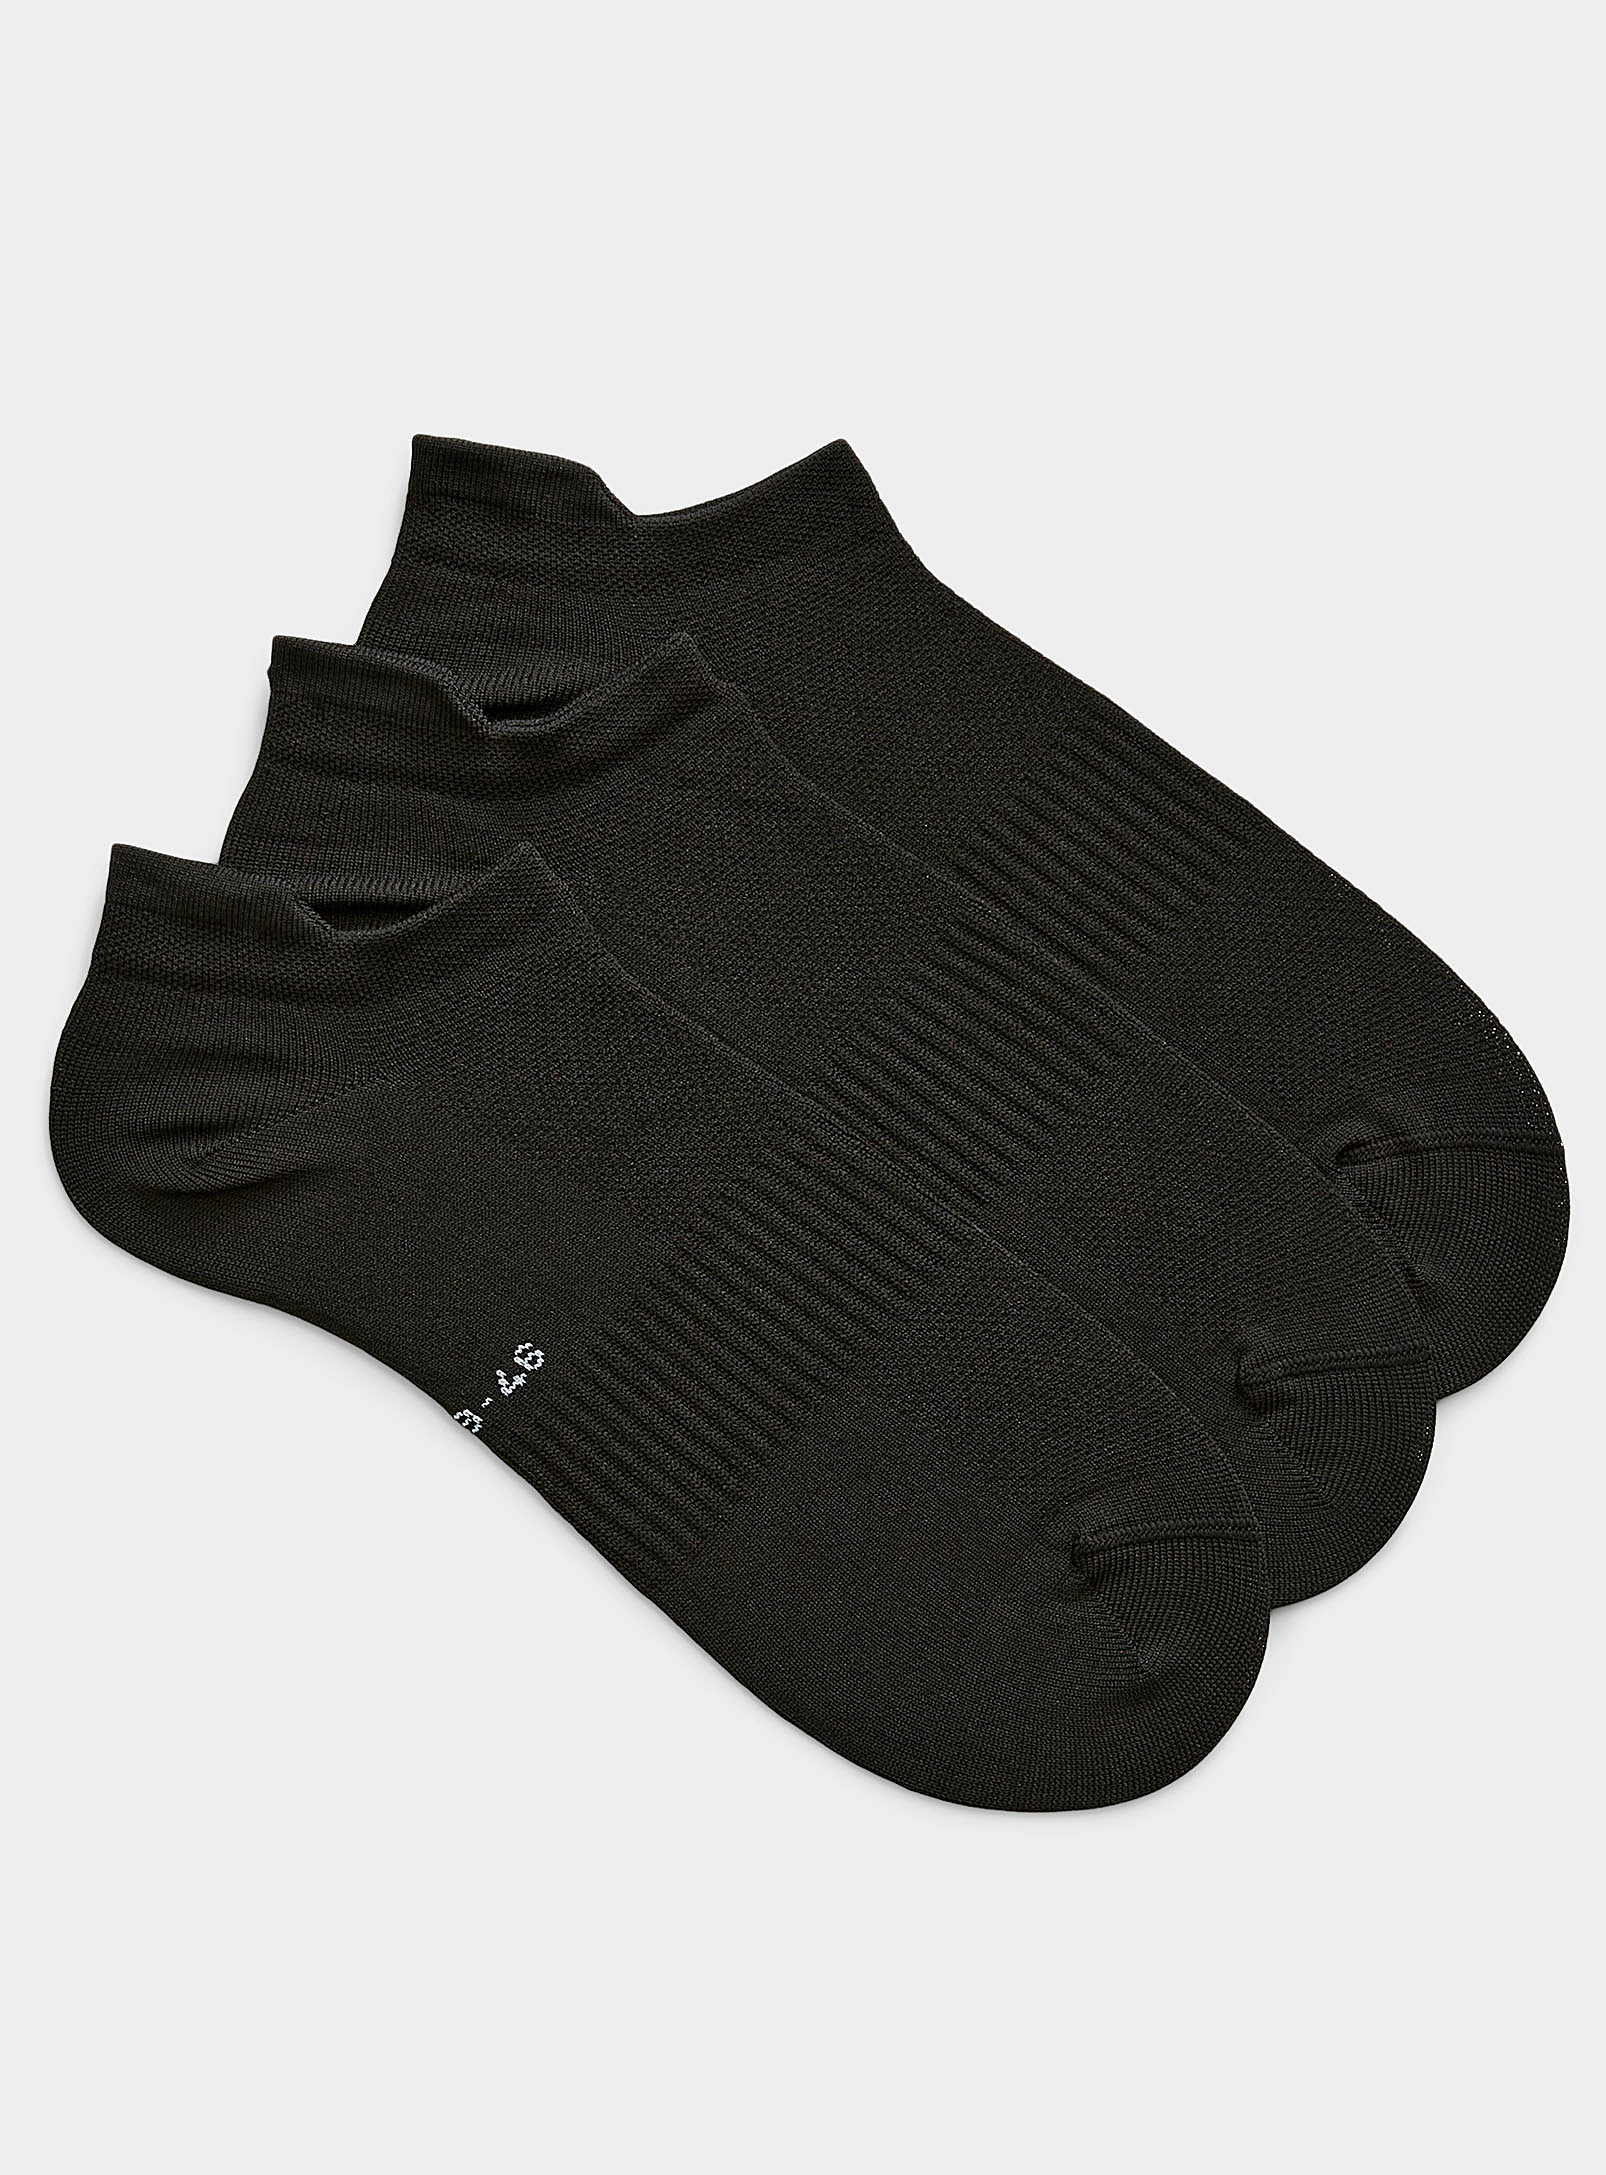 I.fiv5 Piqué Knit Multisport Socks Set Of 3 In Black